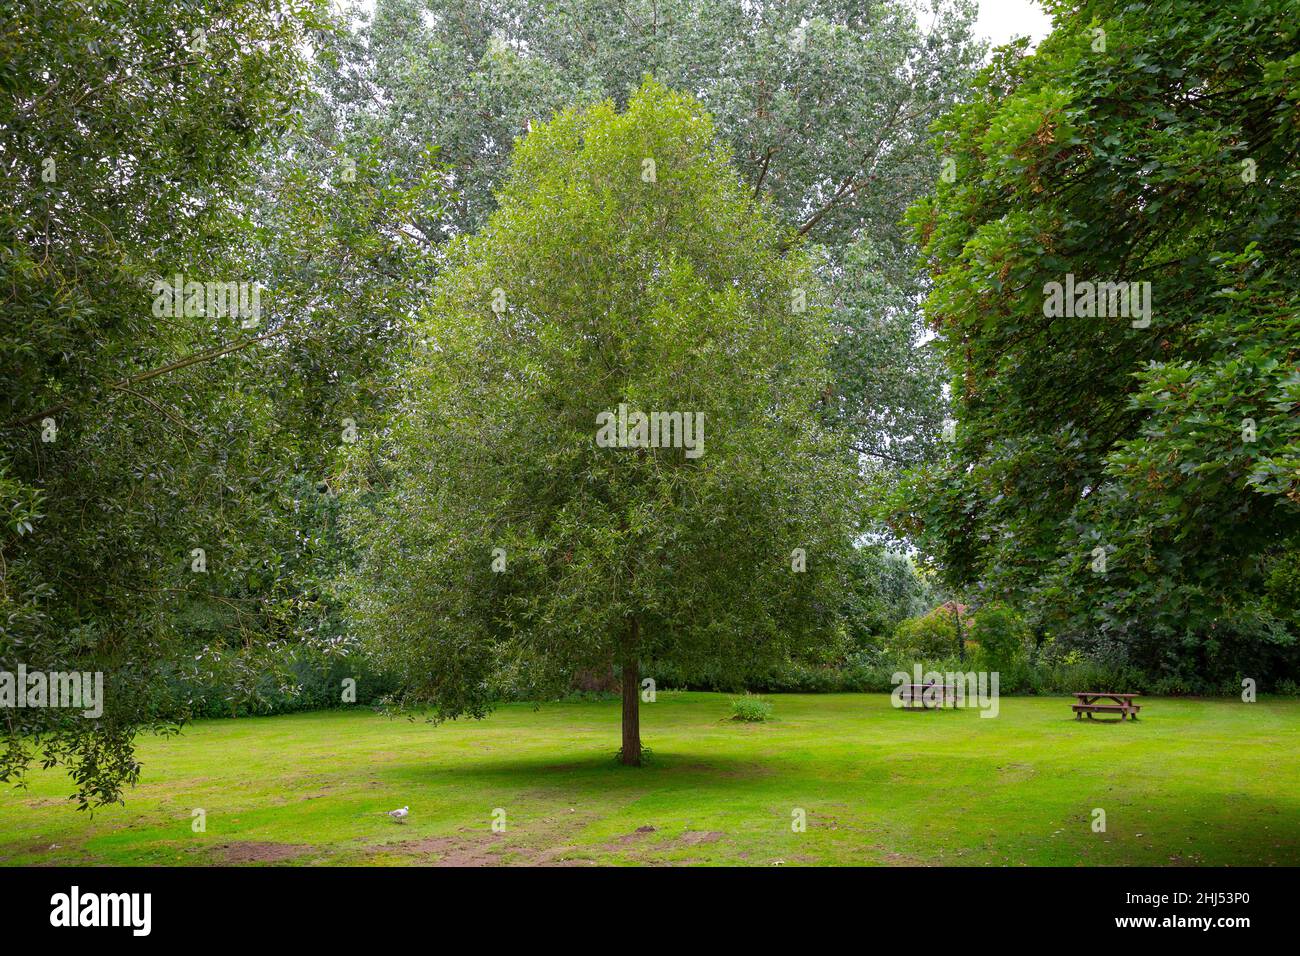 Salix pentandra tree in a park Stock Photo